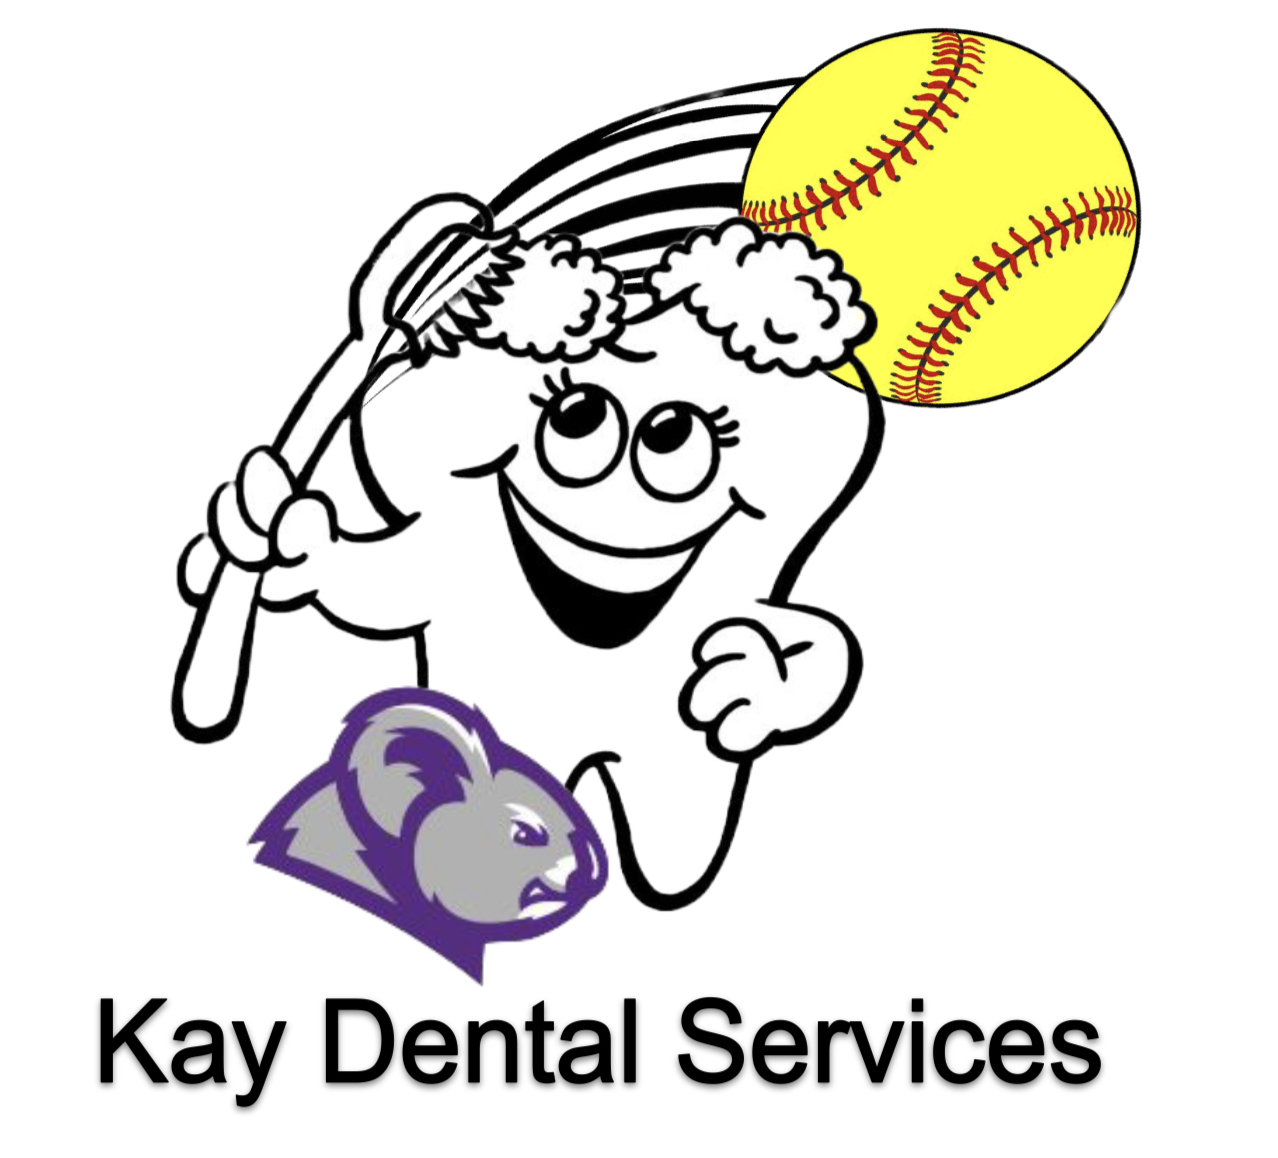 Kay Dental Services